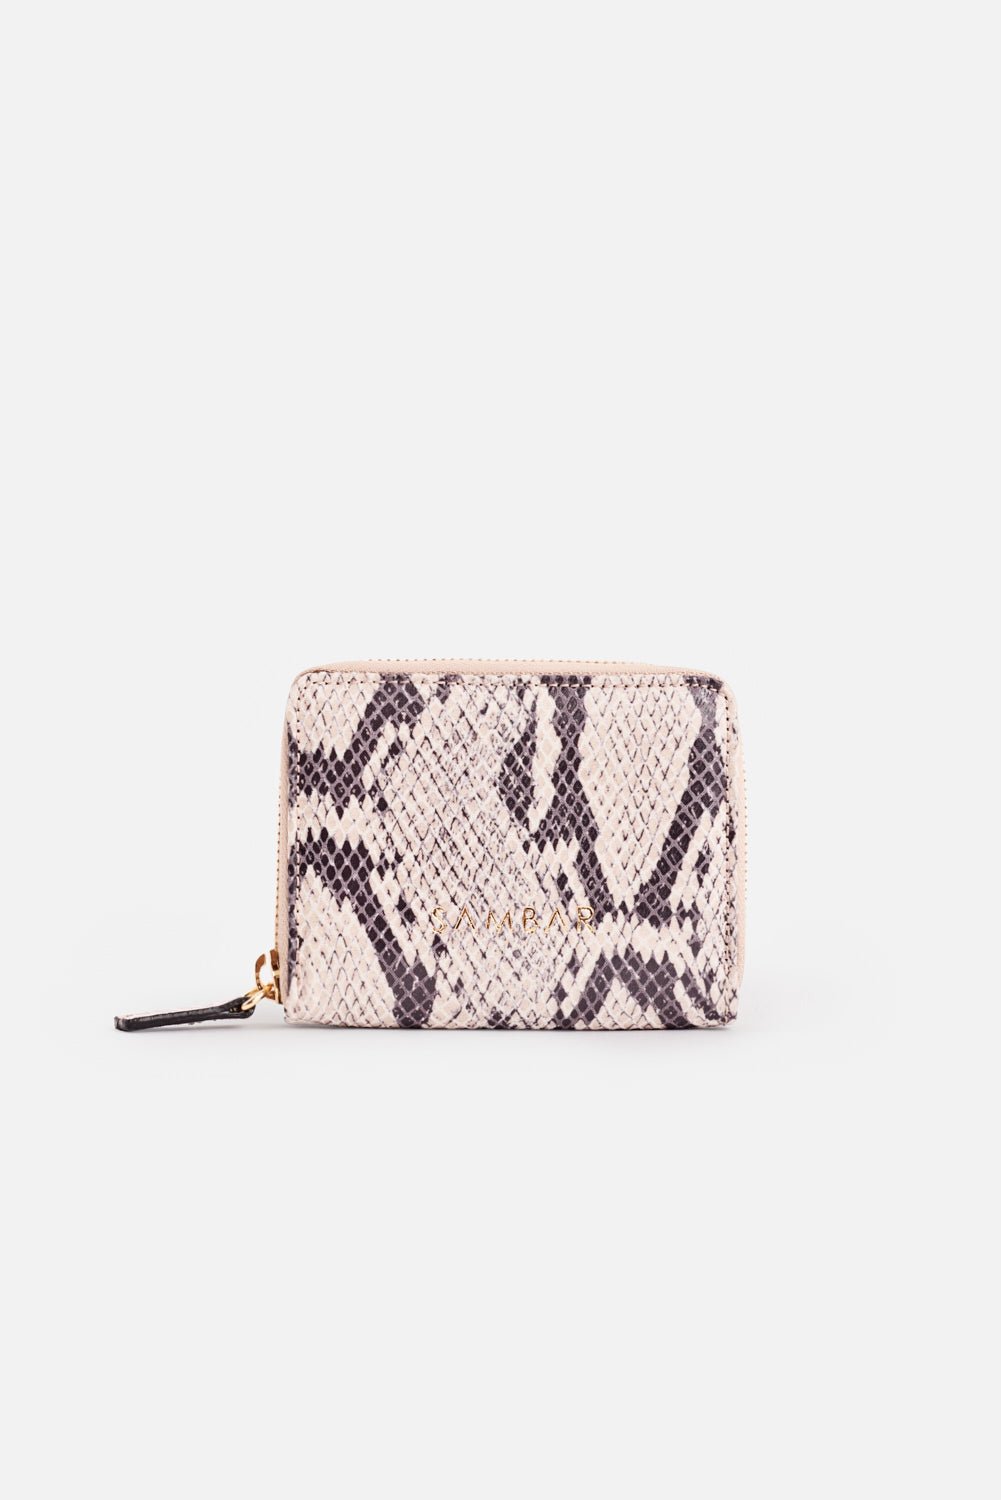 Mini Cooper Deluxe Women Handbags With Free Wallets - Vascara